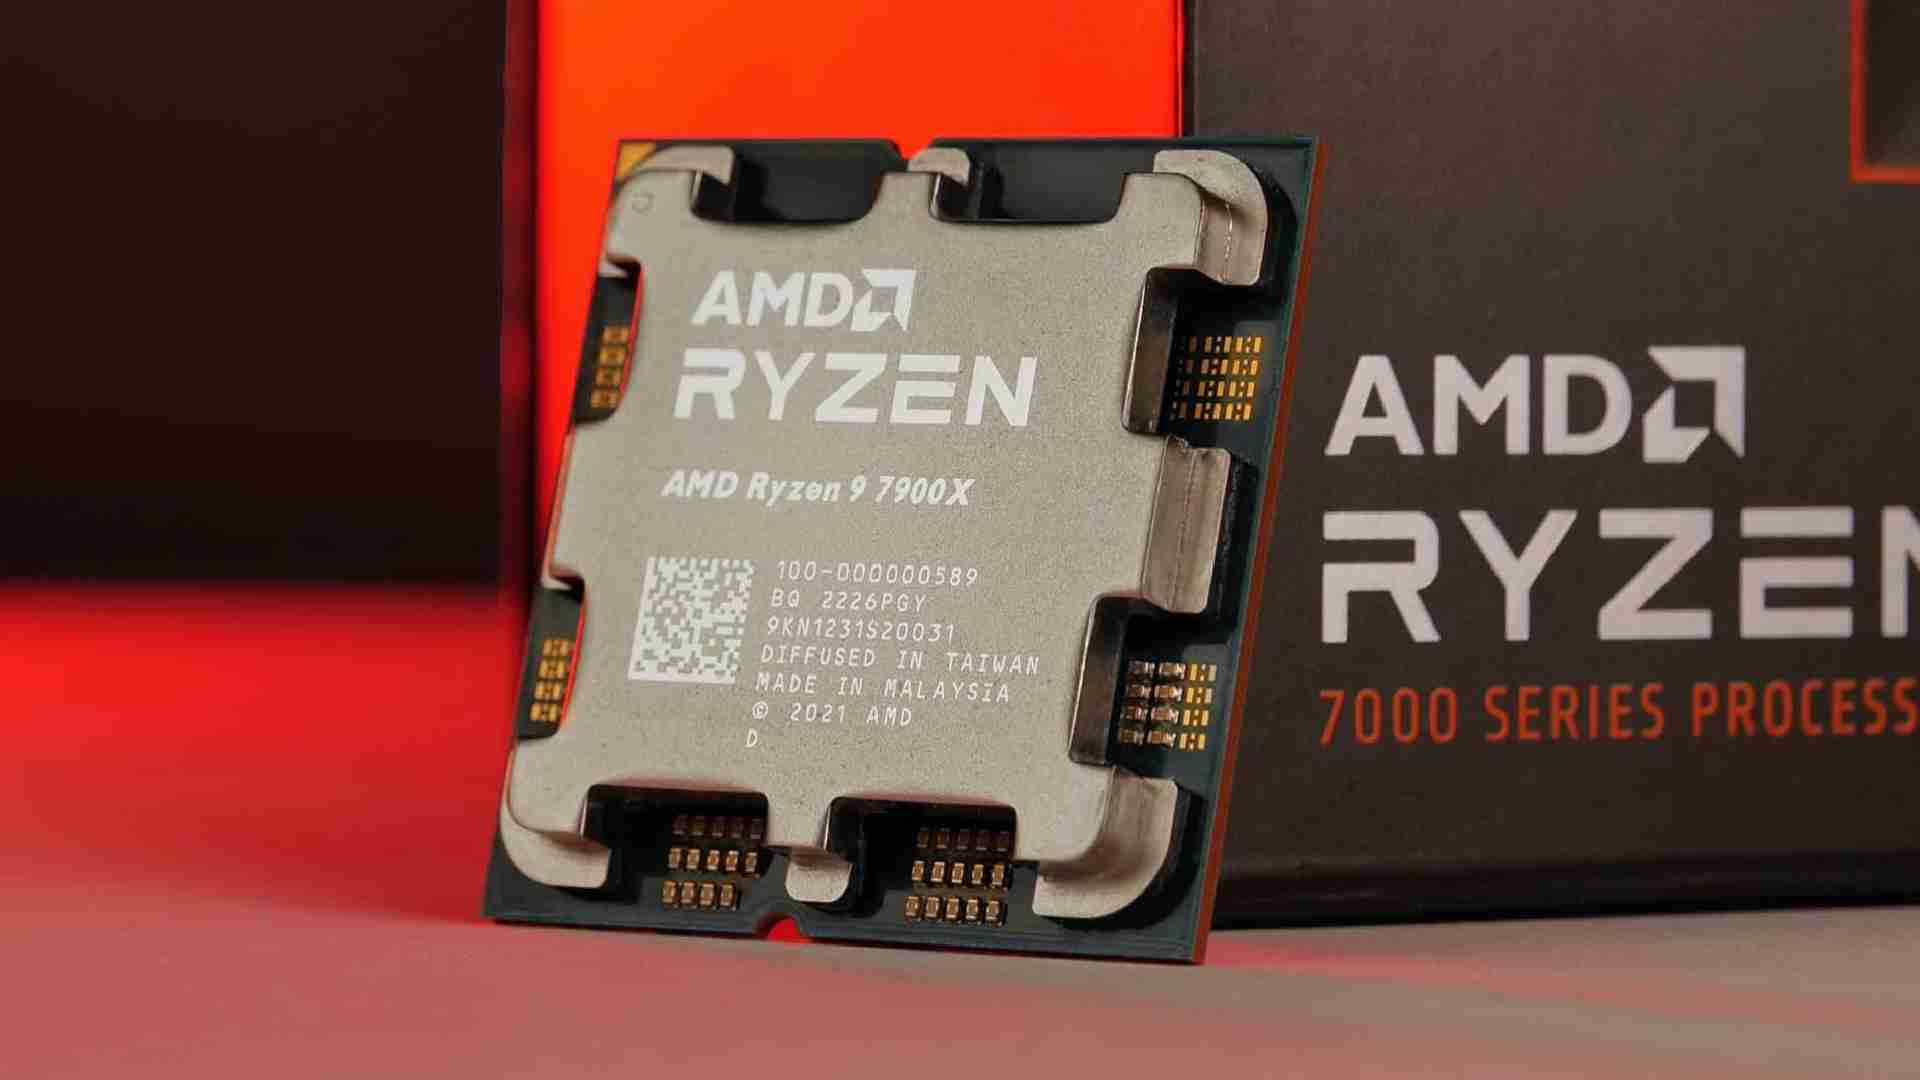 9 7900x купить. Ryzen 9 7900x. Ryzen 9 7900x комплектация. Ryzen 7600x. Процессор AMD Ryzen 9 7900x am5.